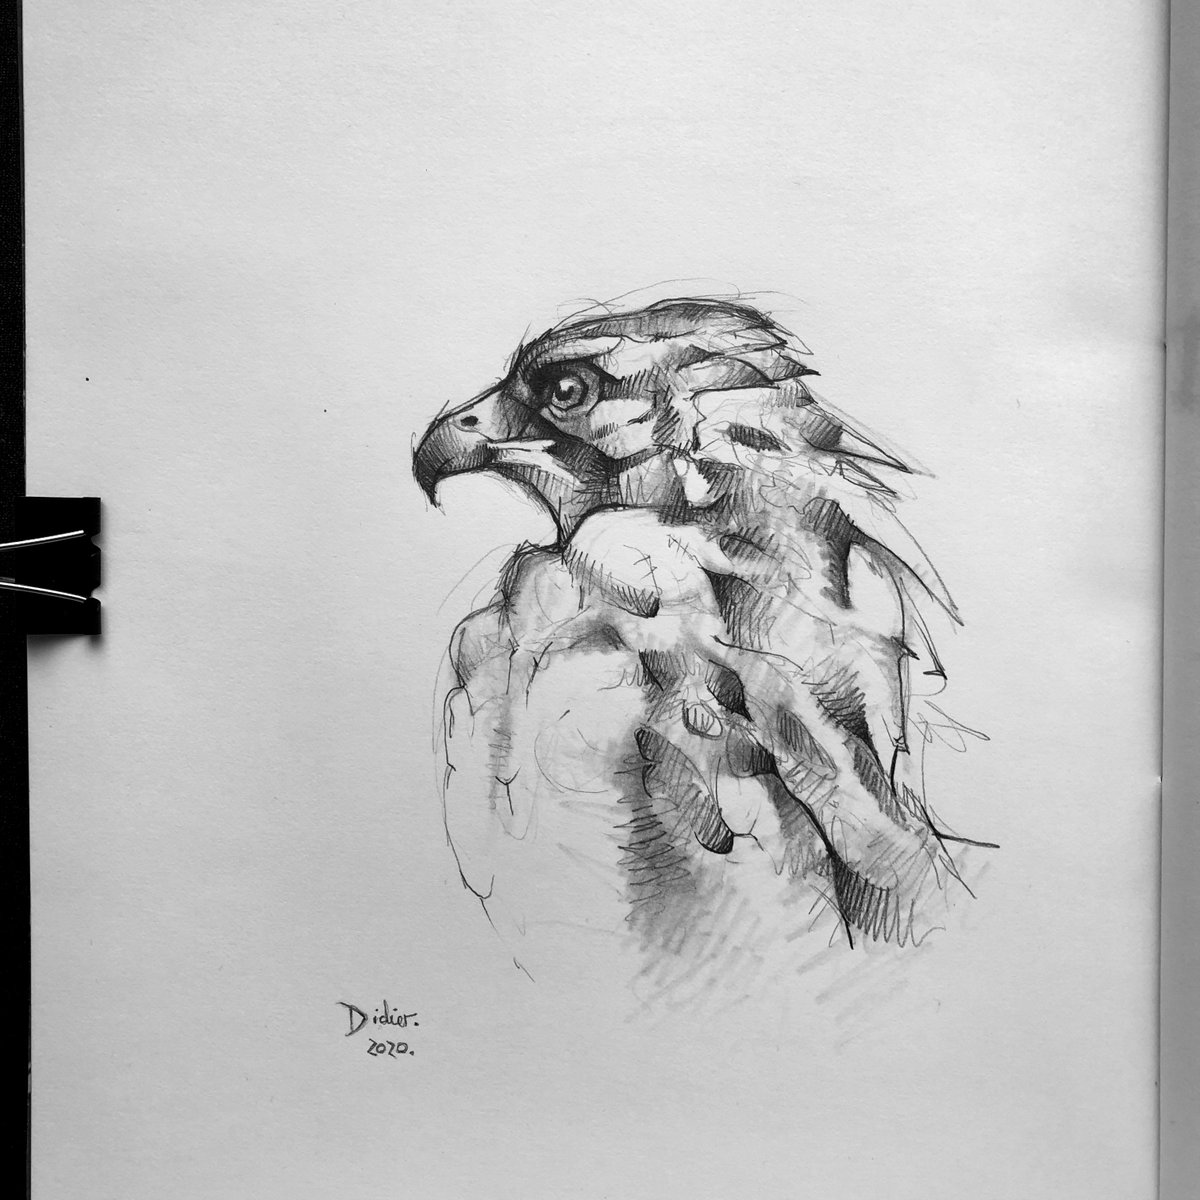 SKETCH. 🦅

#dibujo #drawing #drawingsketch #sketch #sketchbook #sketching #sketchingdaily #sketchingart #sketchingtime #naturaleza #nature #ave #aves #bird #birds #birdsoftwitter #avesdetwitter #birdart #birdartwork